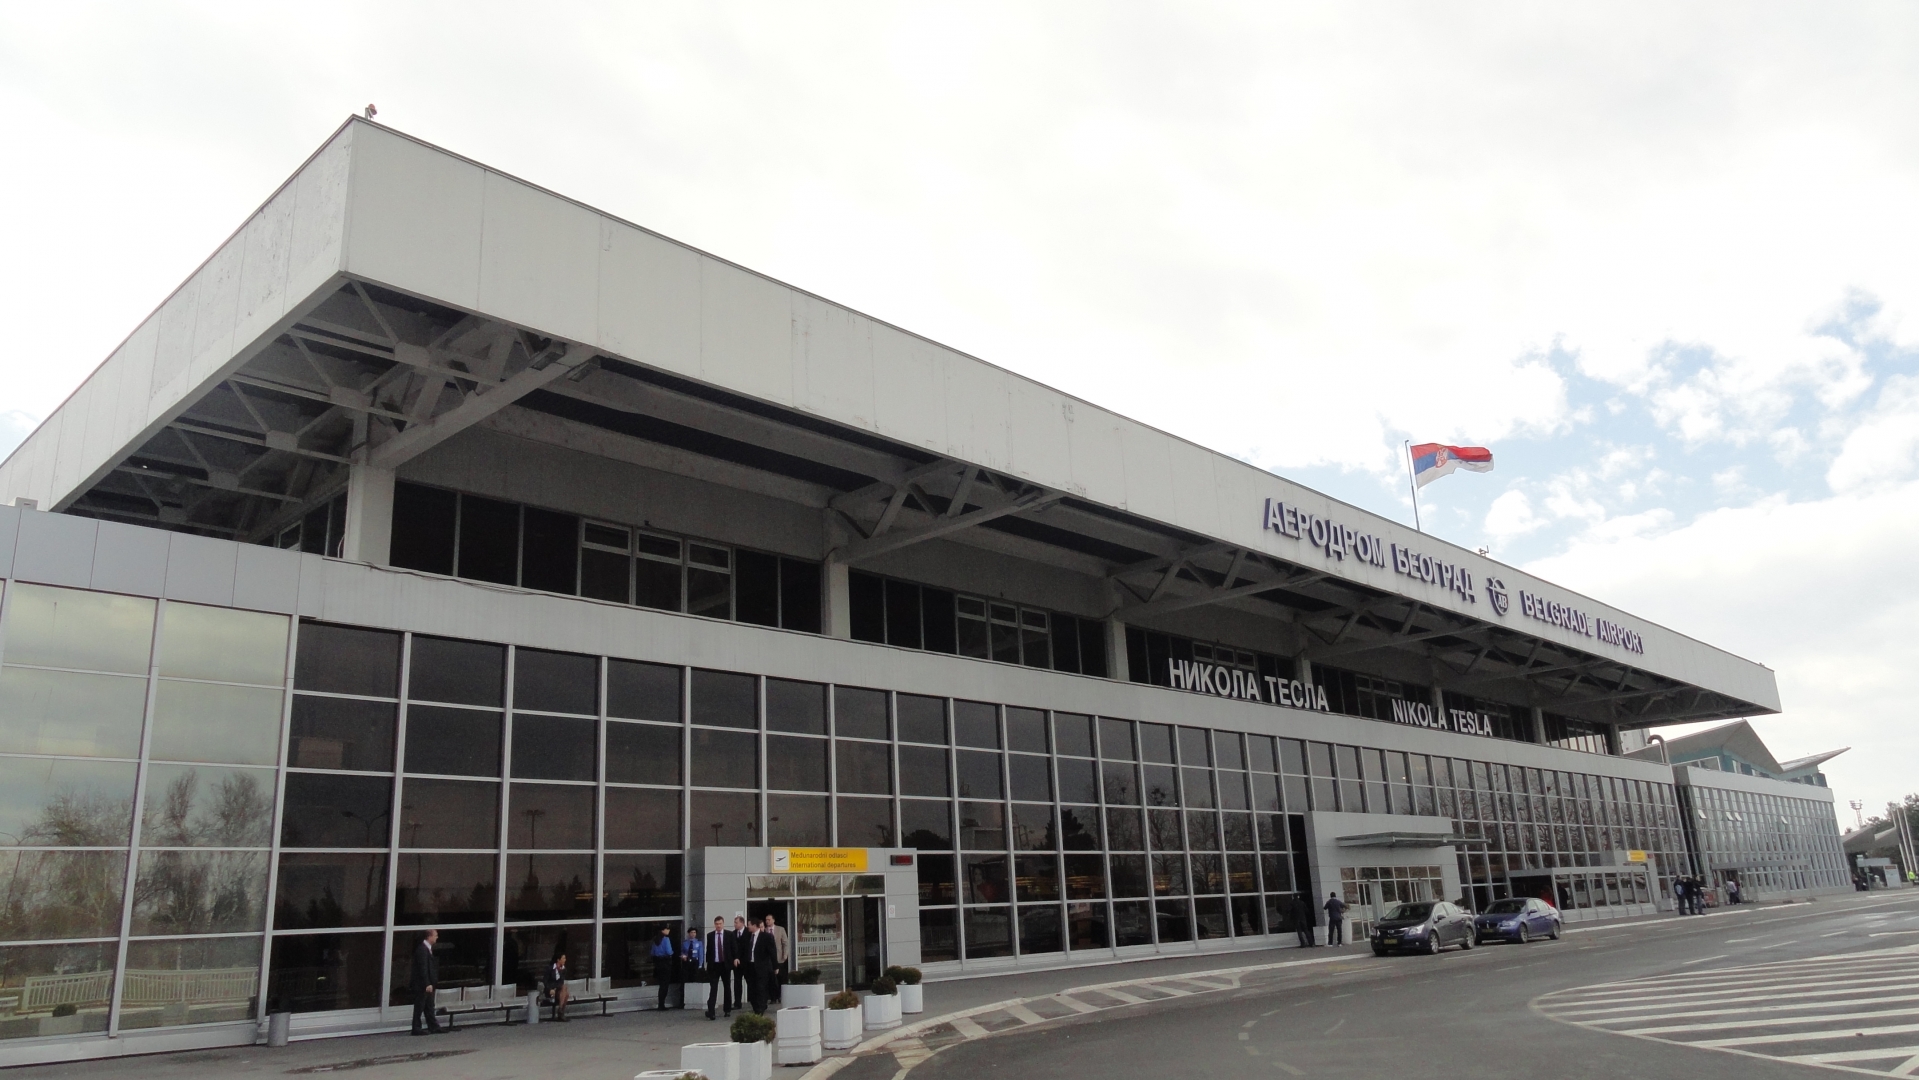 аэропорт в сербии